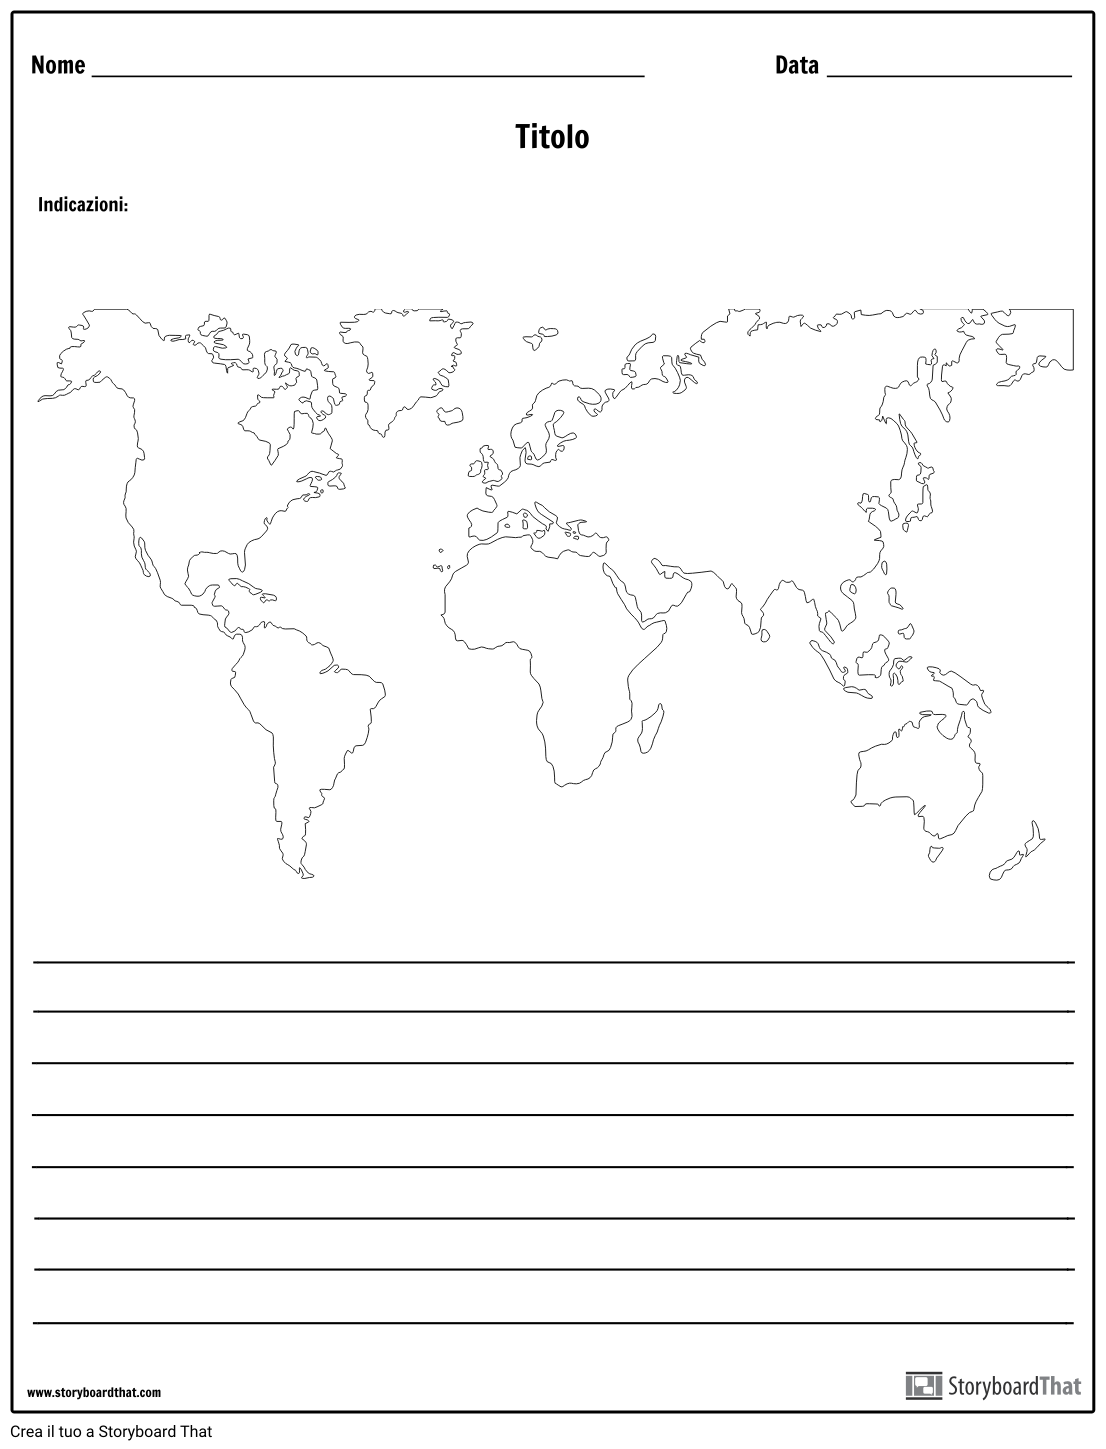 Mappa del Mondo - con Linee